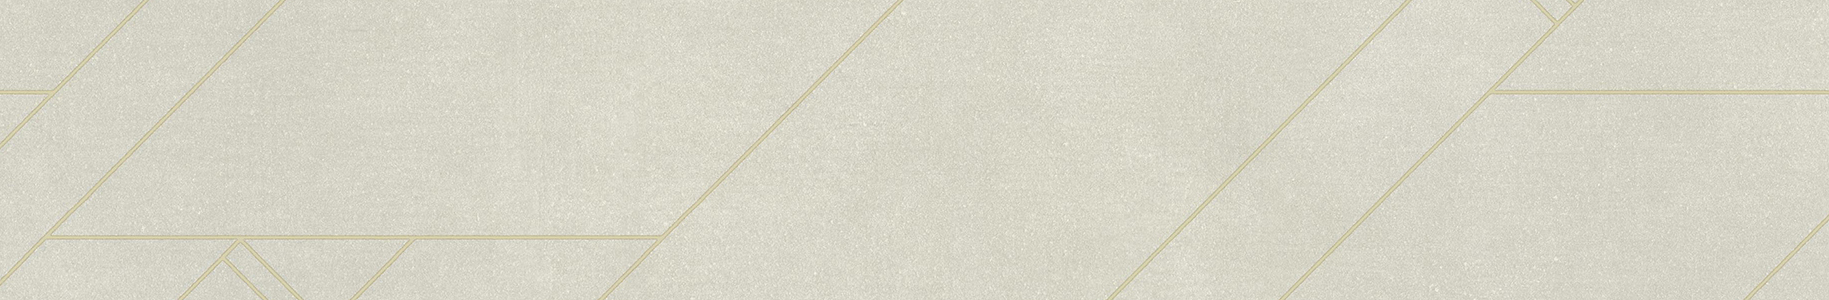 ES3411-15 川島織物セルコン 床タイル エグザストーン カワラパス 川島織物セルコン フロアタイル